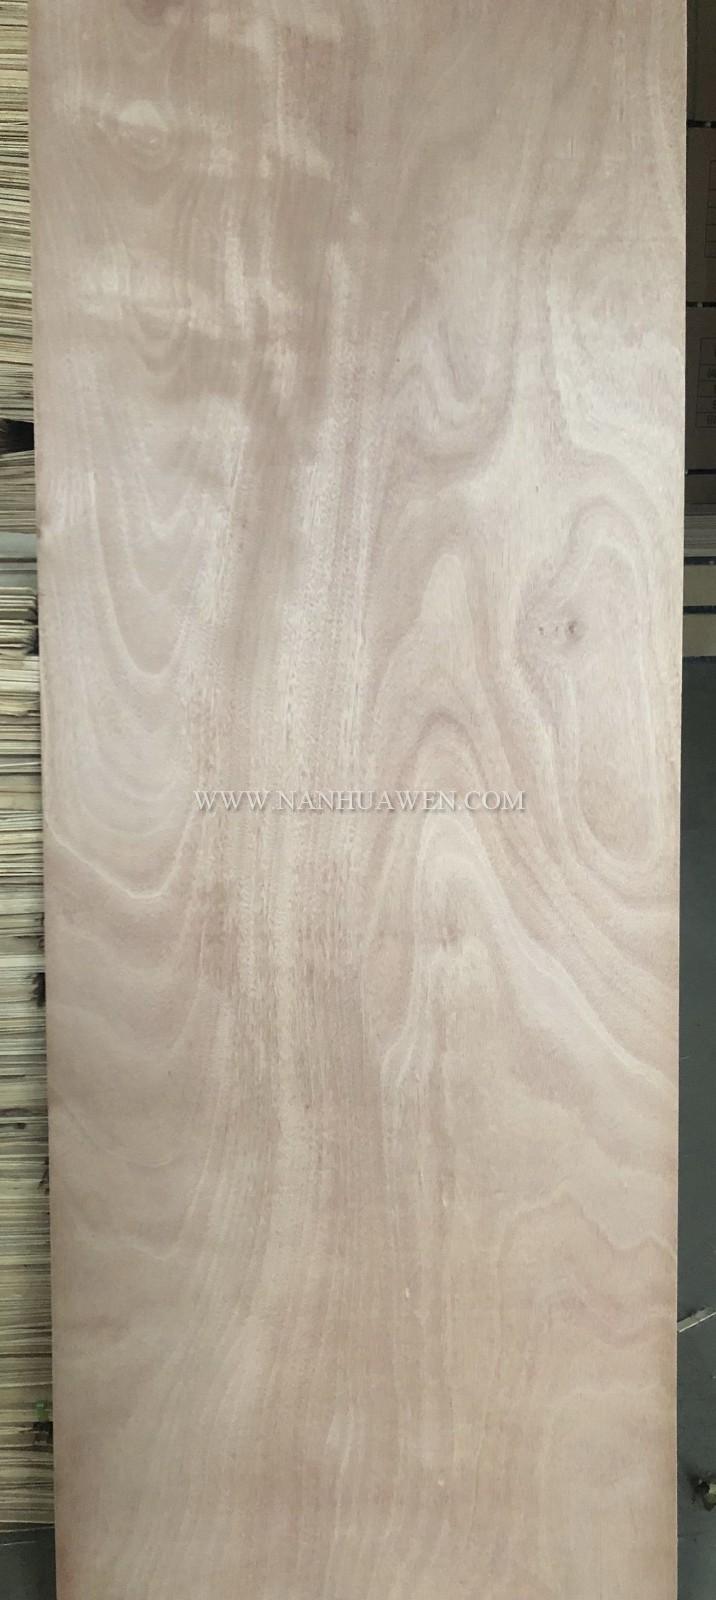 Plywood Door skin.JPG